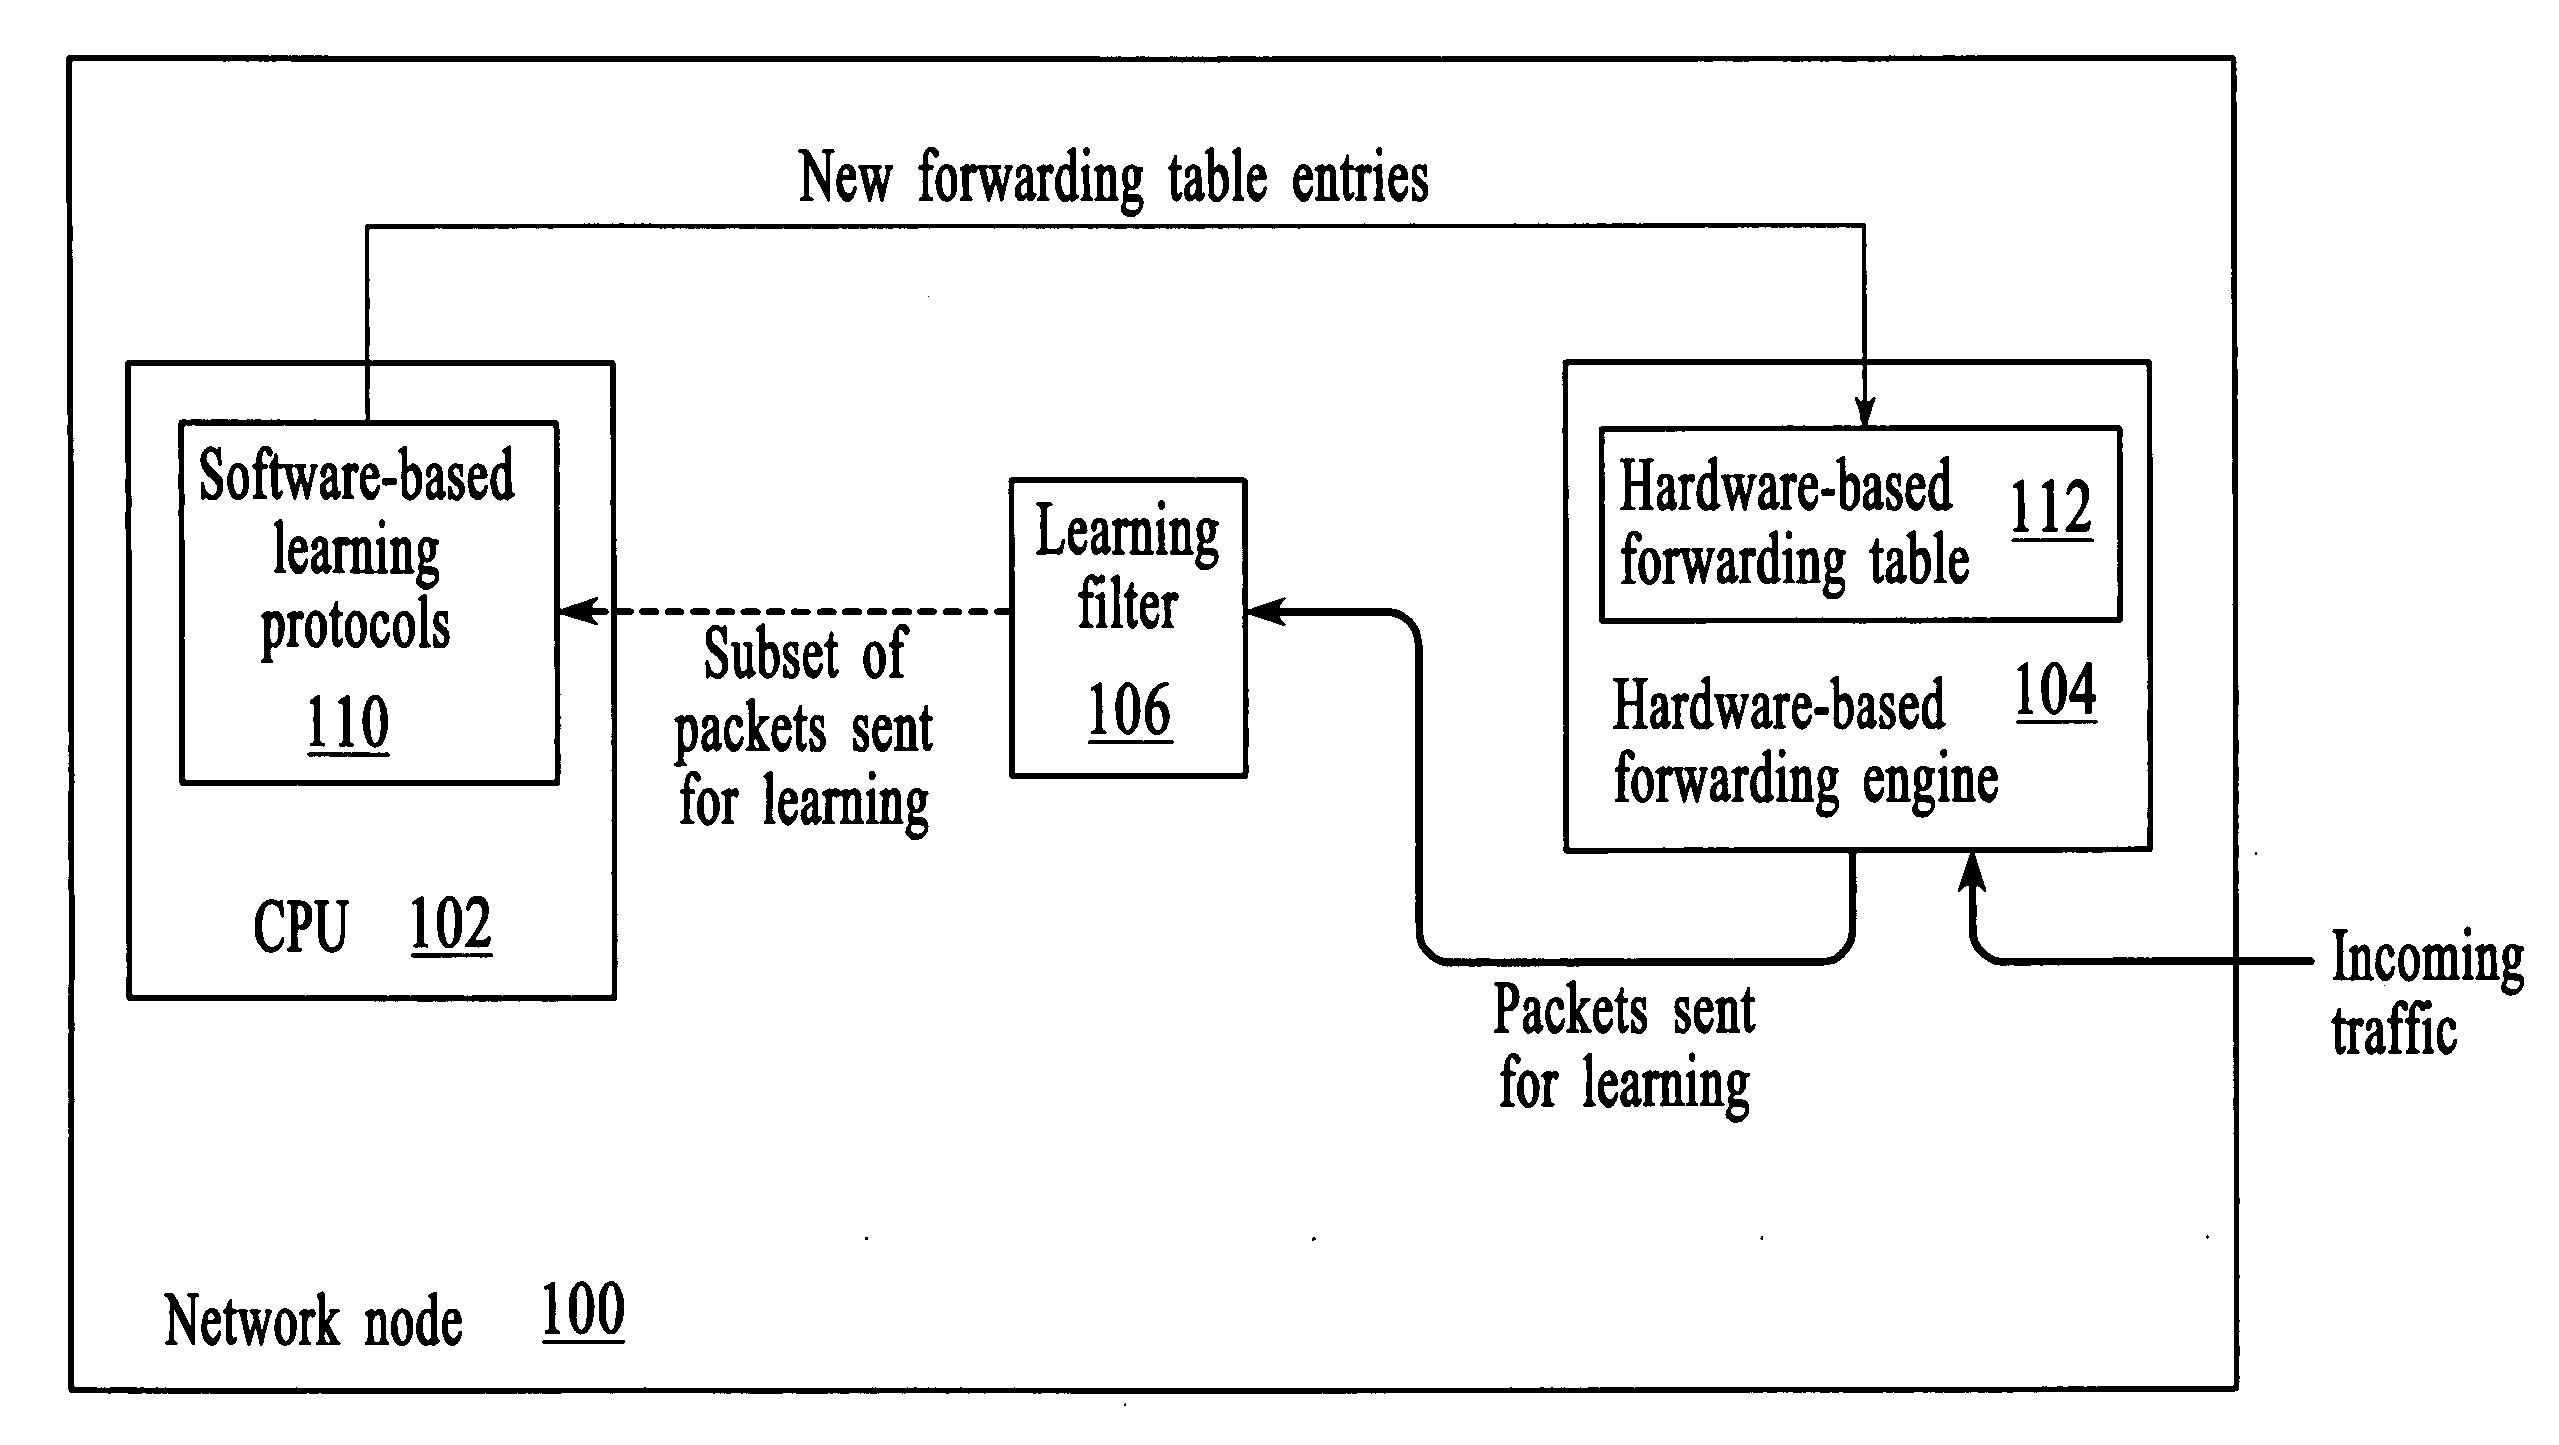 Managing processing utilization in a network node